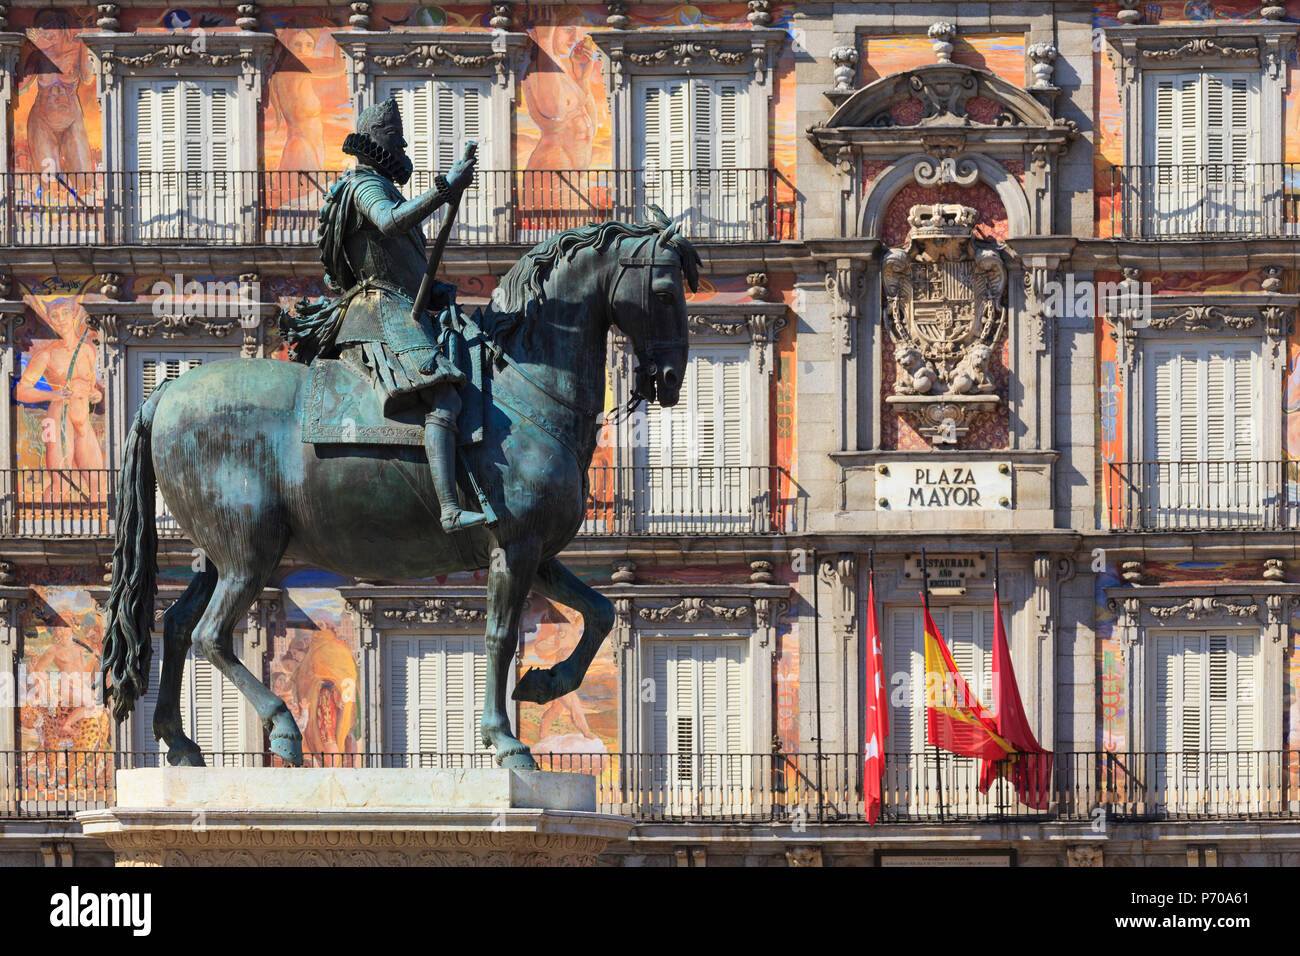 Spagna, Madrid, Plaza Mayor Foto Stock